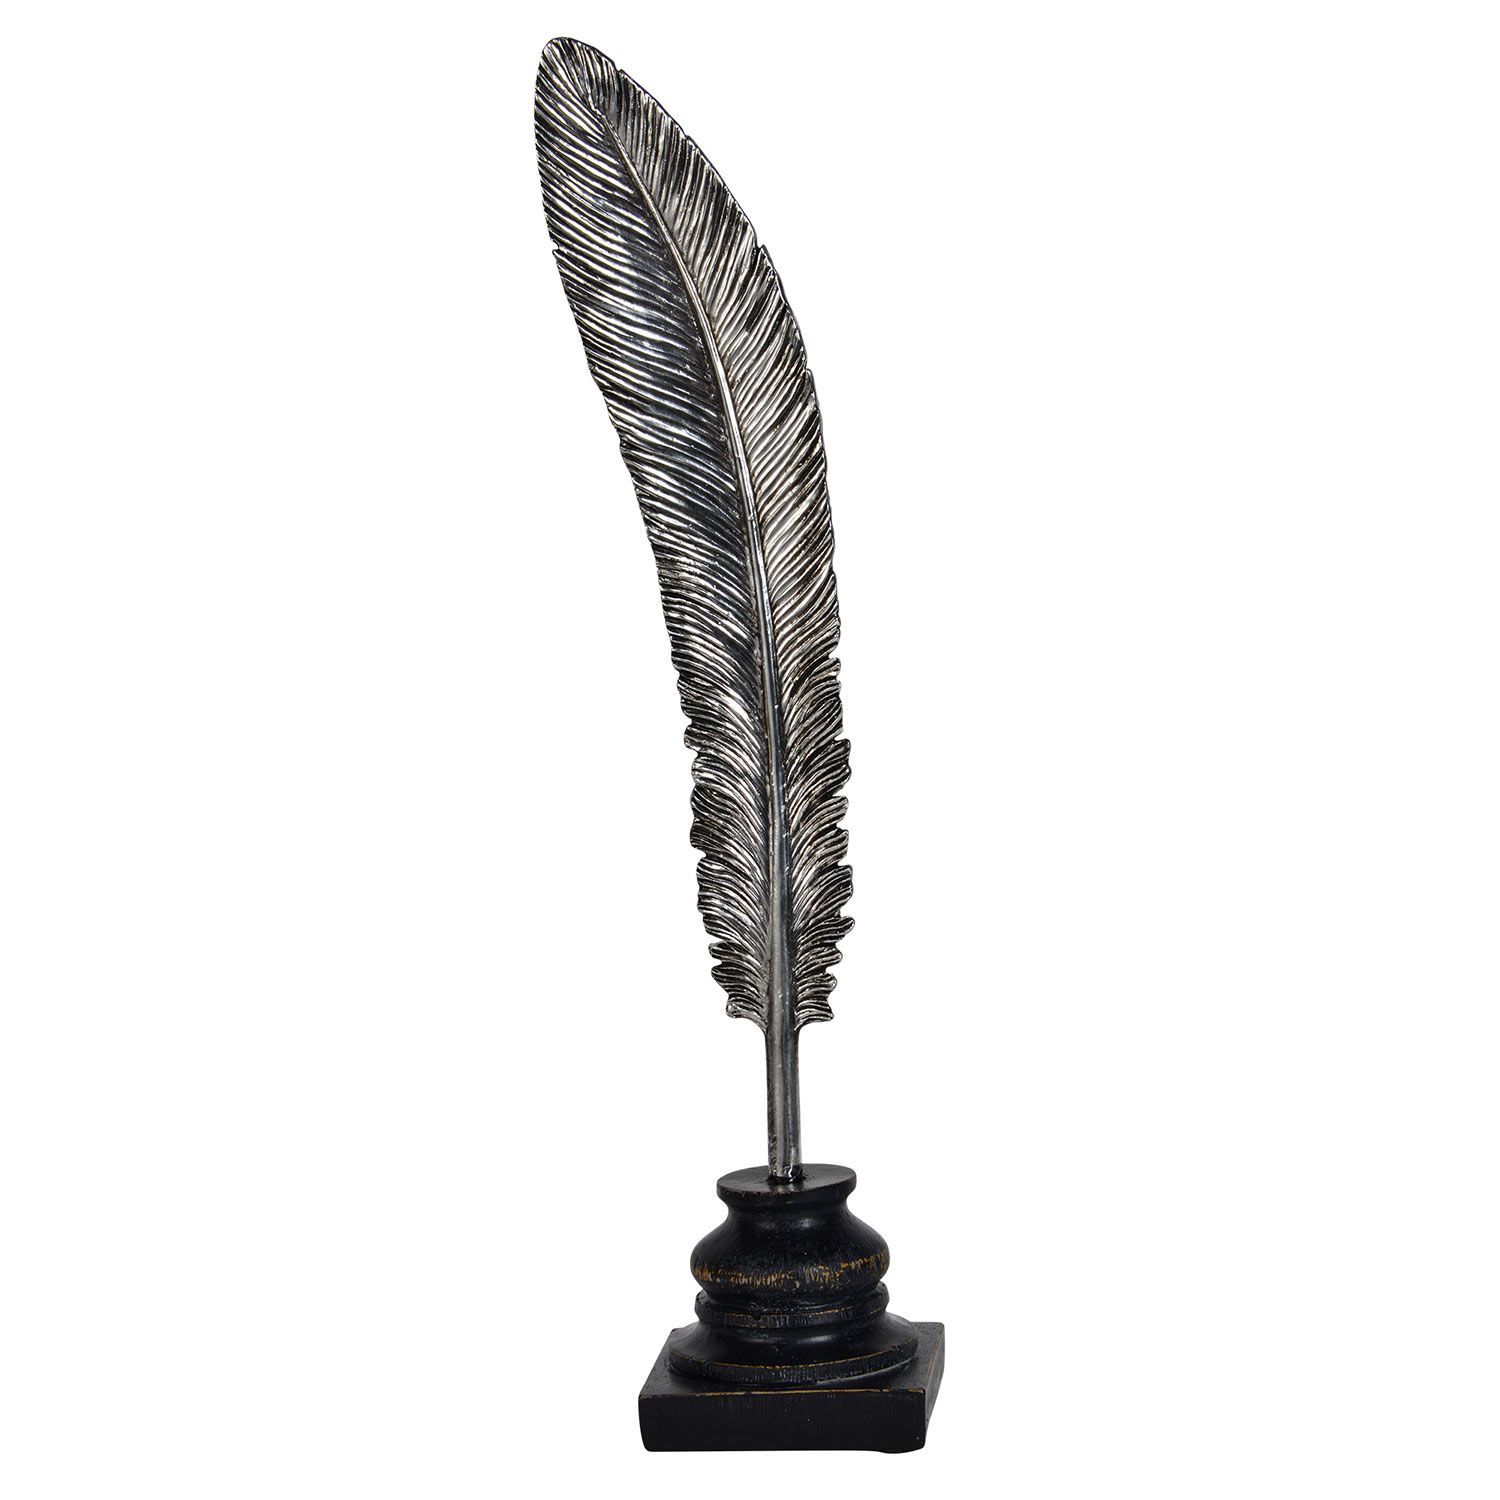 Ren-Wil Plume Statue - Antique Silver/Black